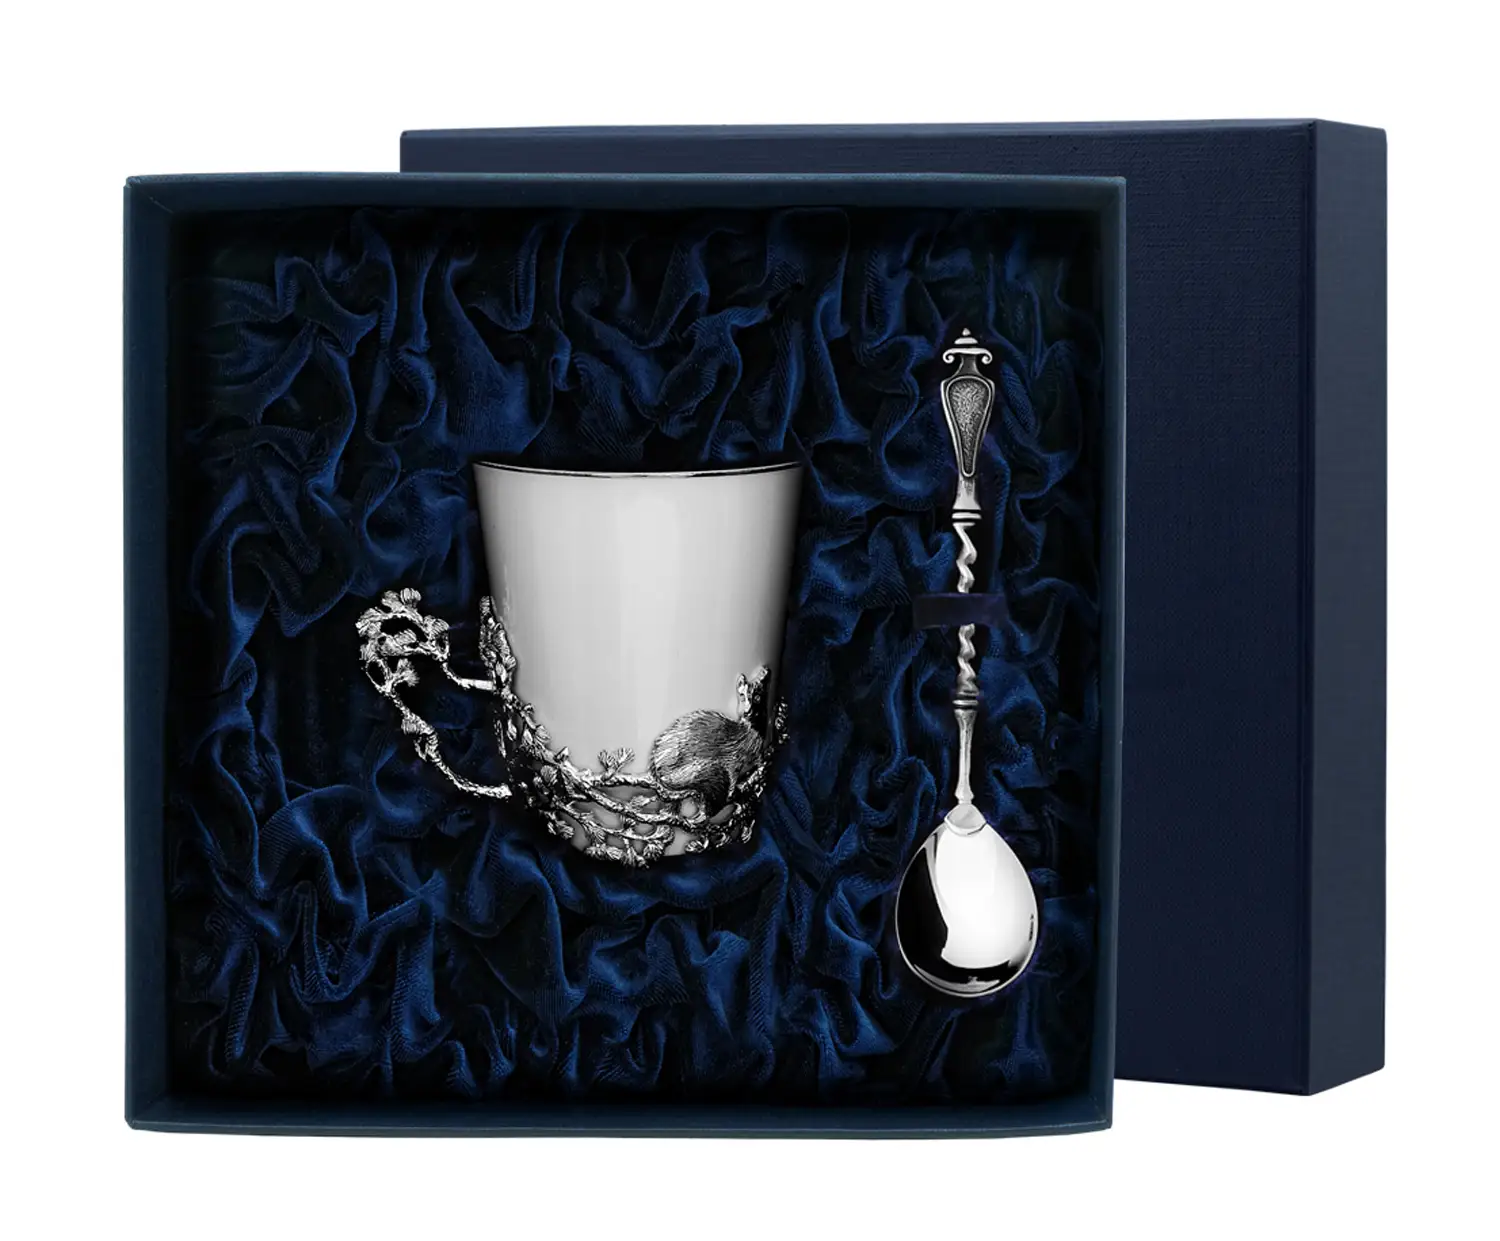 Набор чайная чашка Куница: ложка, чашка (Серебро 925) набор чайная чашка меценат ложка чашка серебро 925